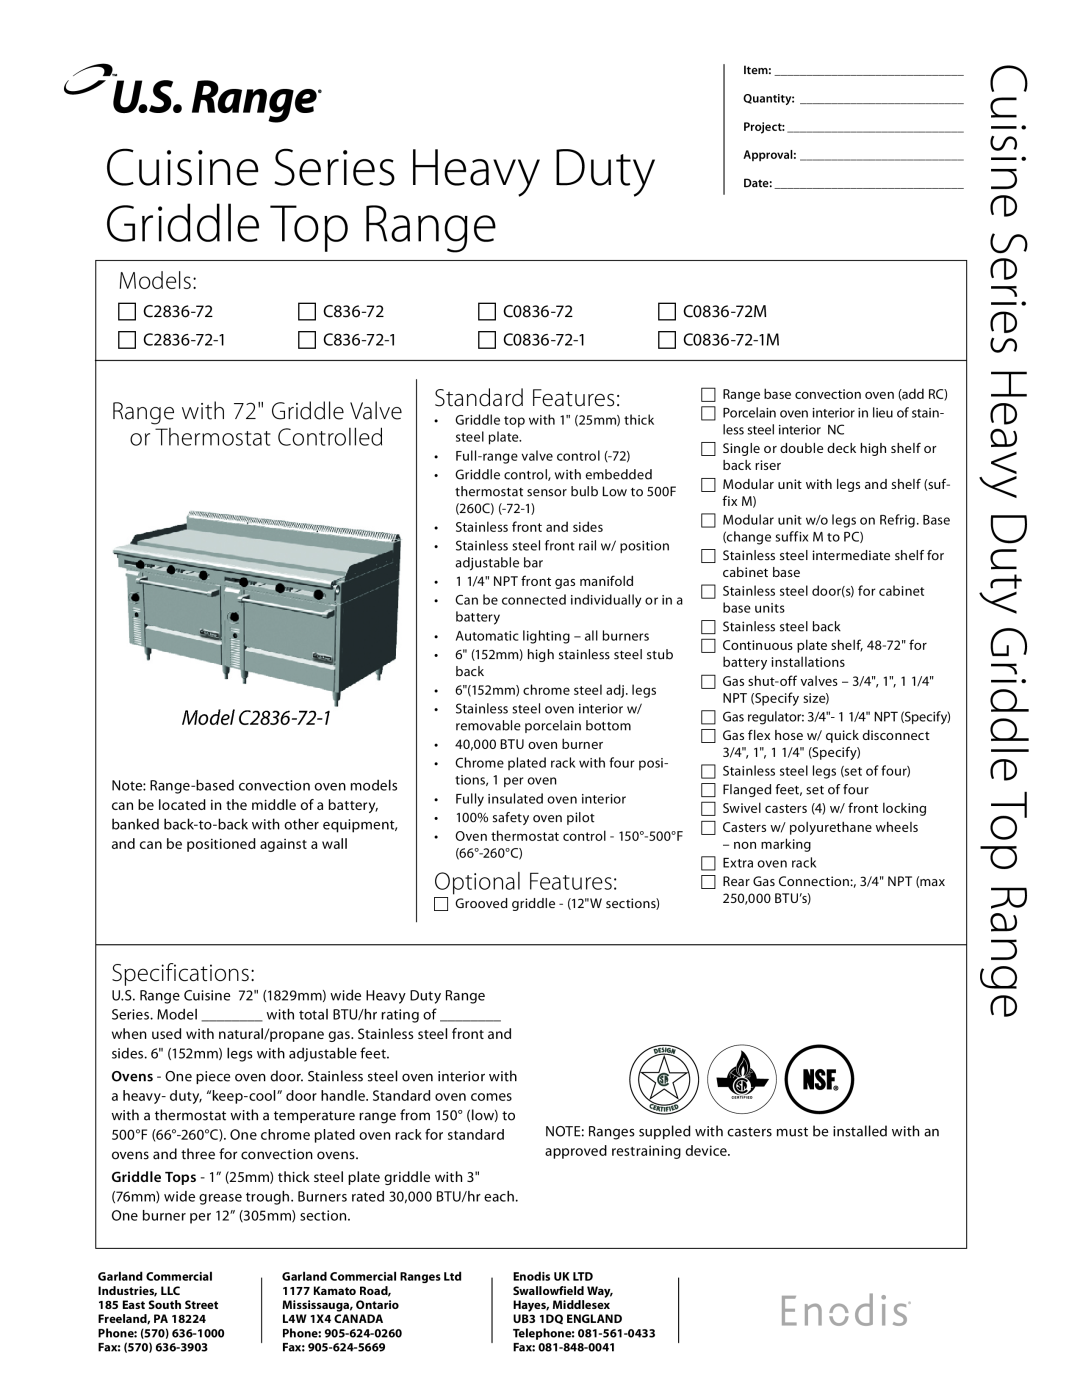 Garland C2836-72-1 specifications Range with 72 Griddle Valve, Griddle Top Range, Cuisine Series, Models, Specifications 